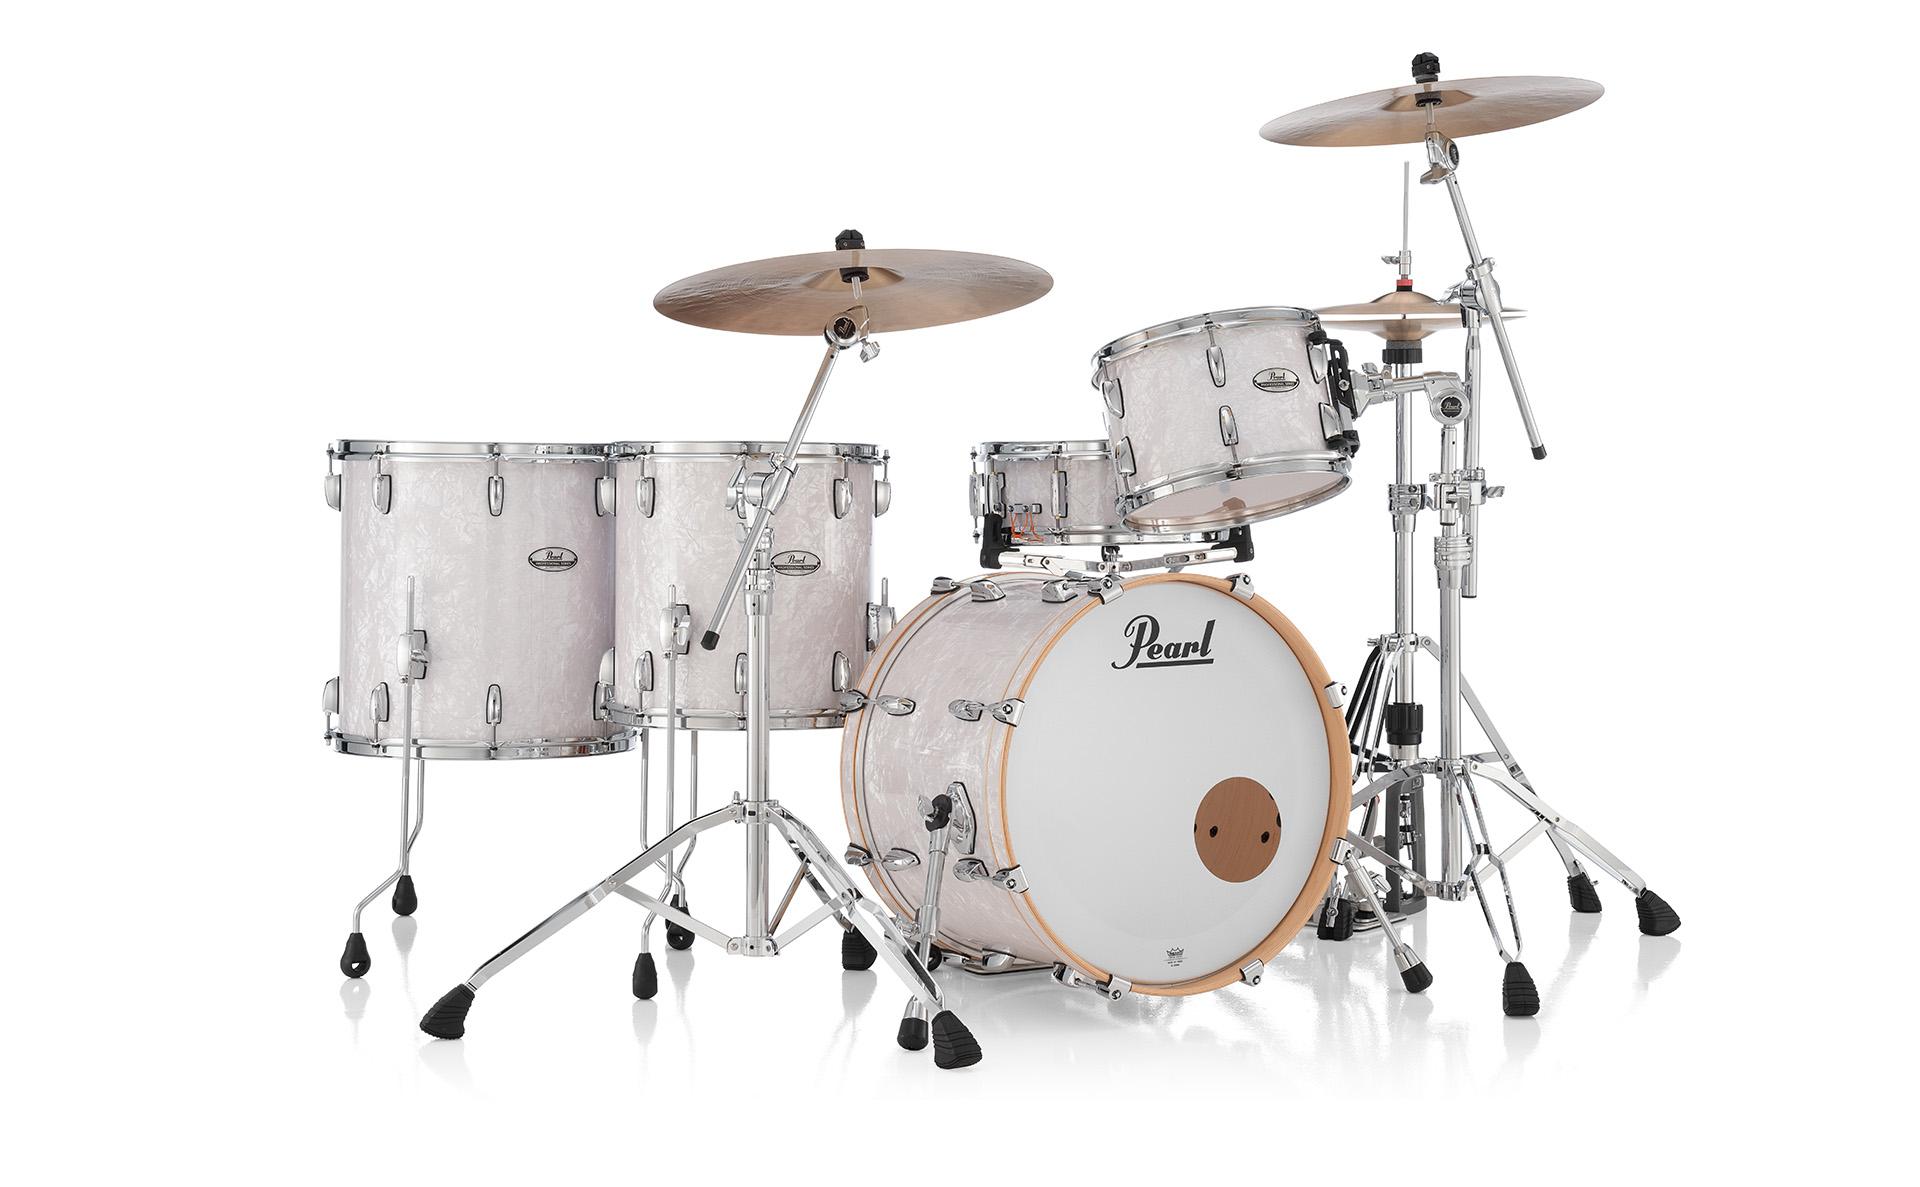 Professional Series | パール楽器【公式サイト】Pearl Drums